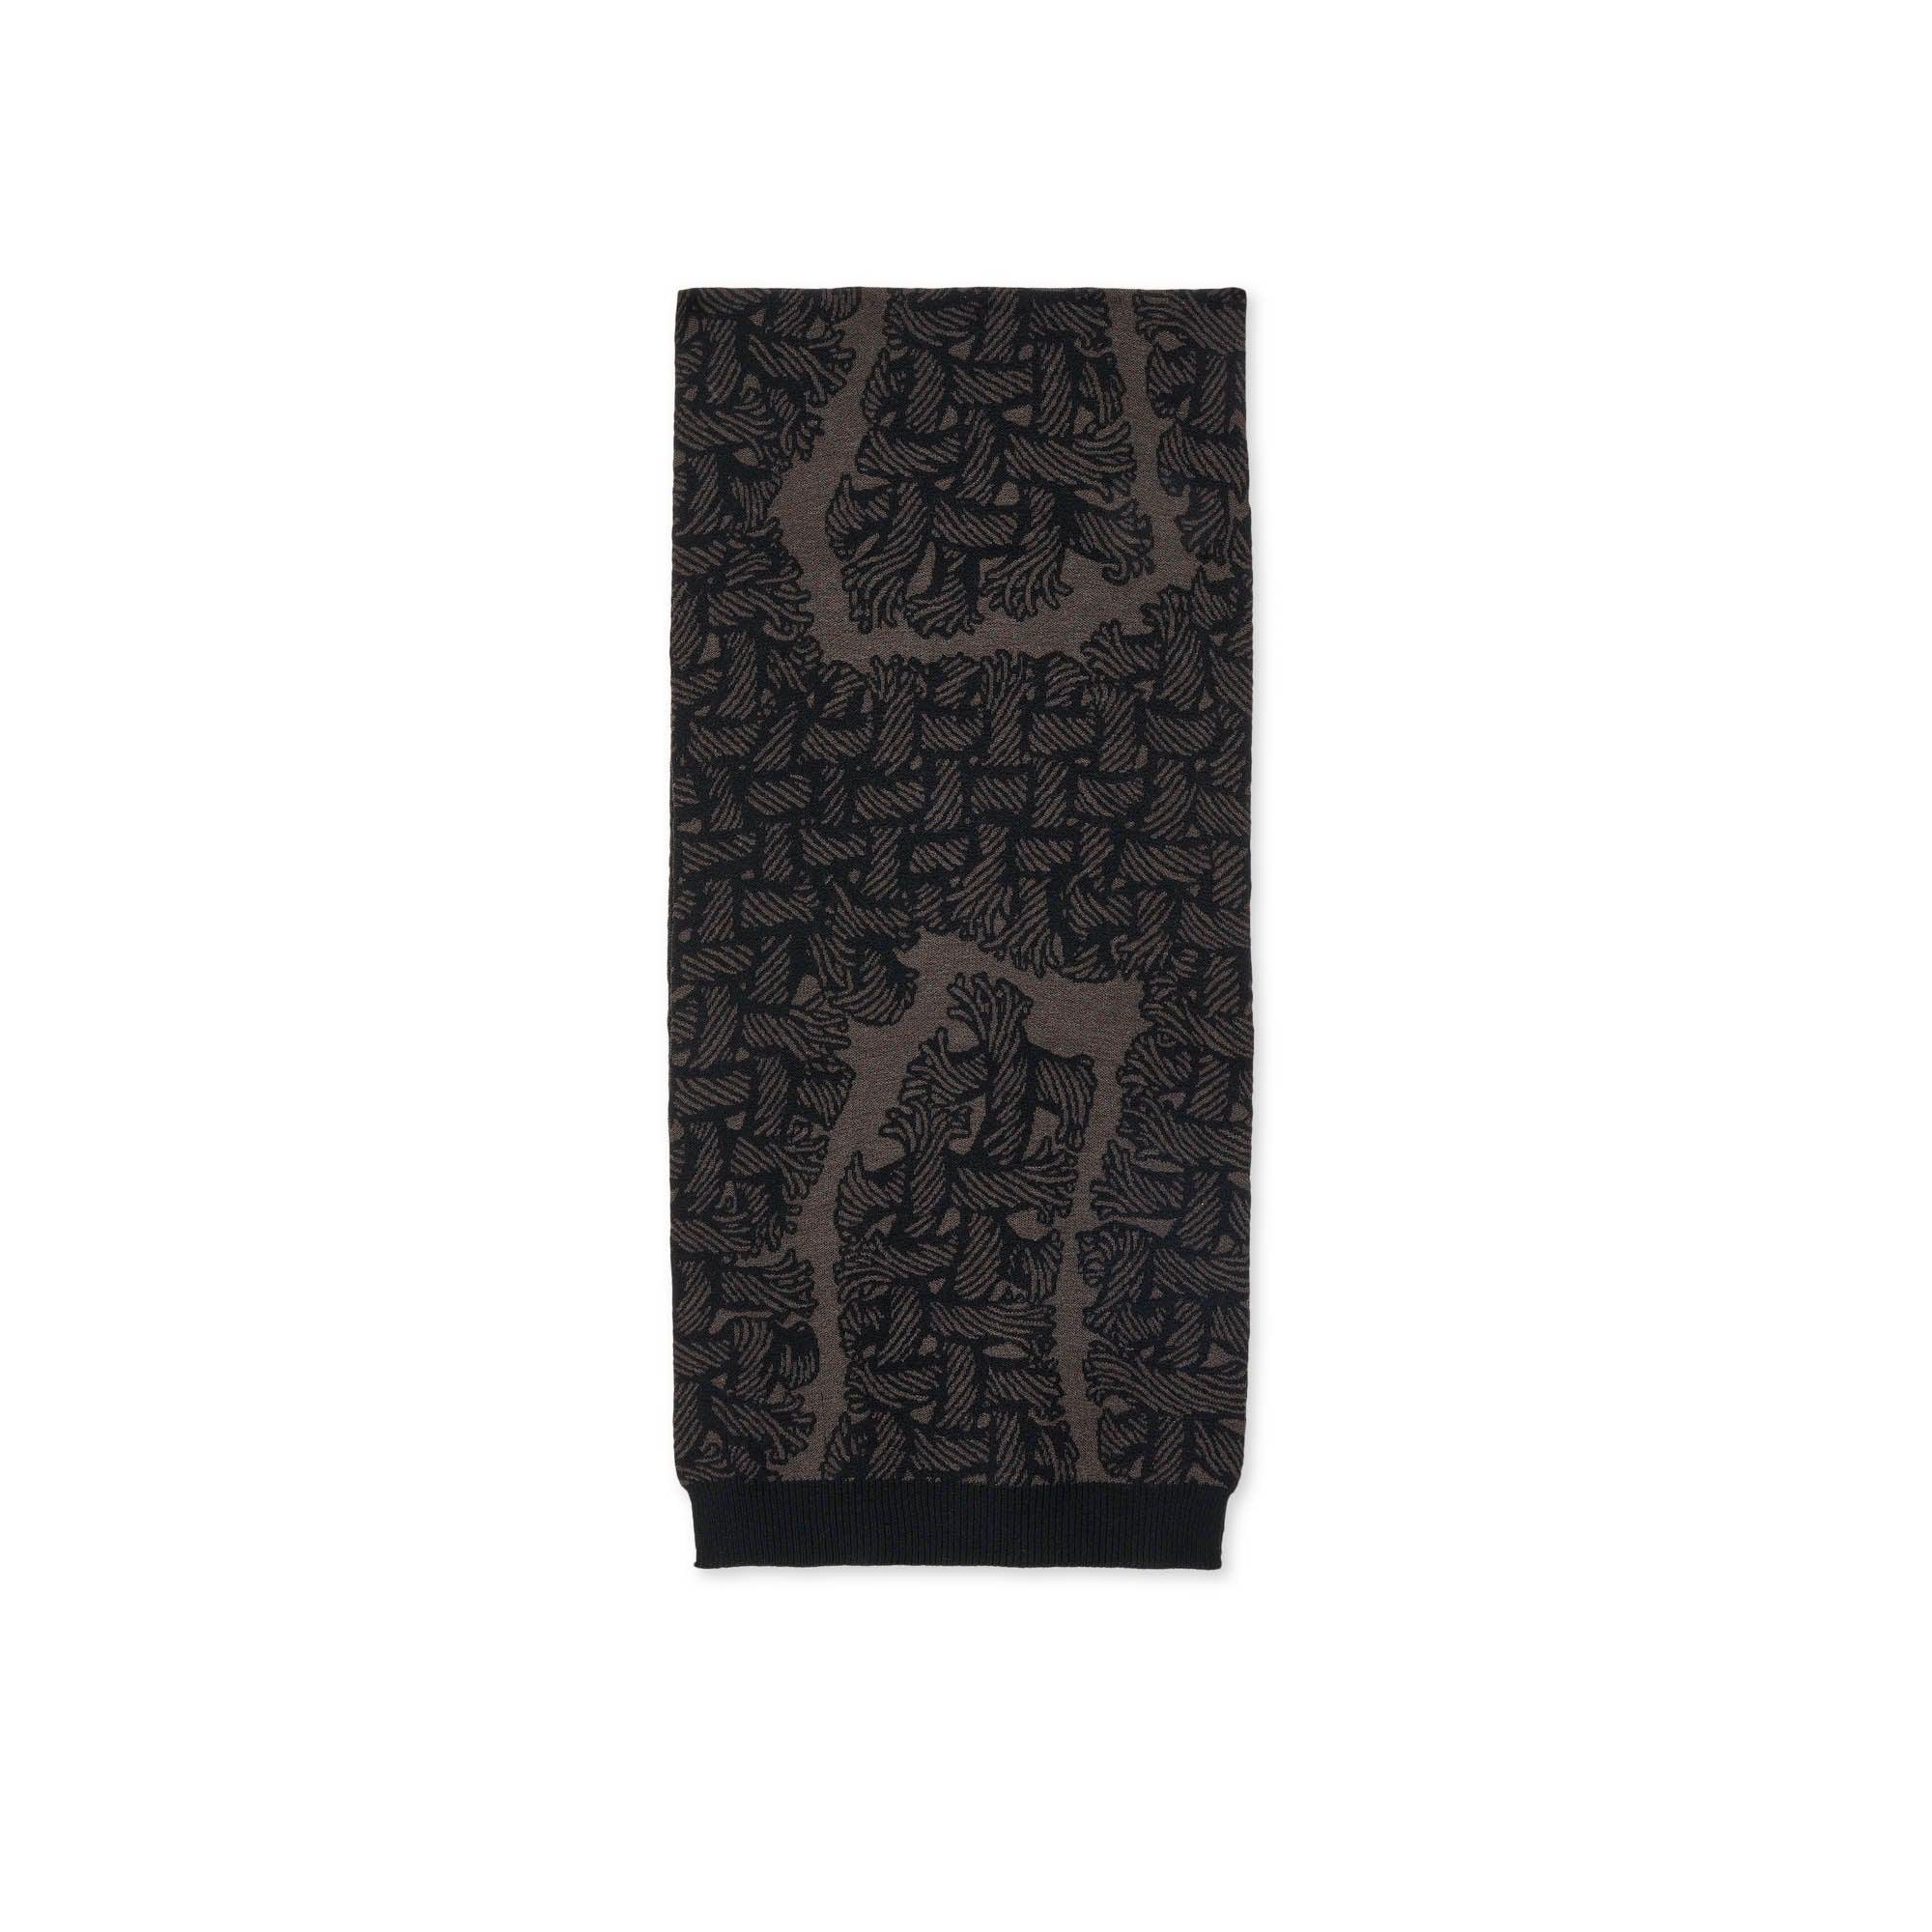 Christopher Nemeth - Knitwear RV Scarf - (Dark Brown) by CHRISTOPHER NEMETH